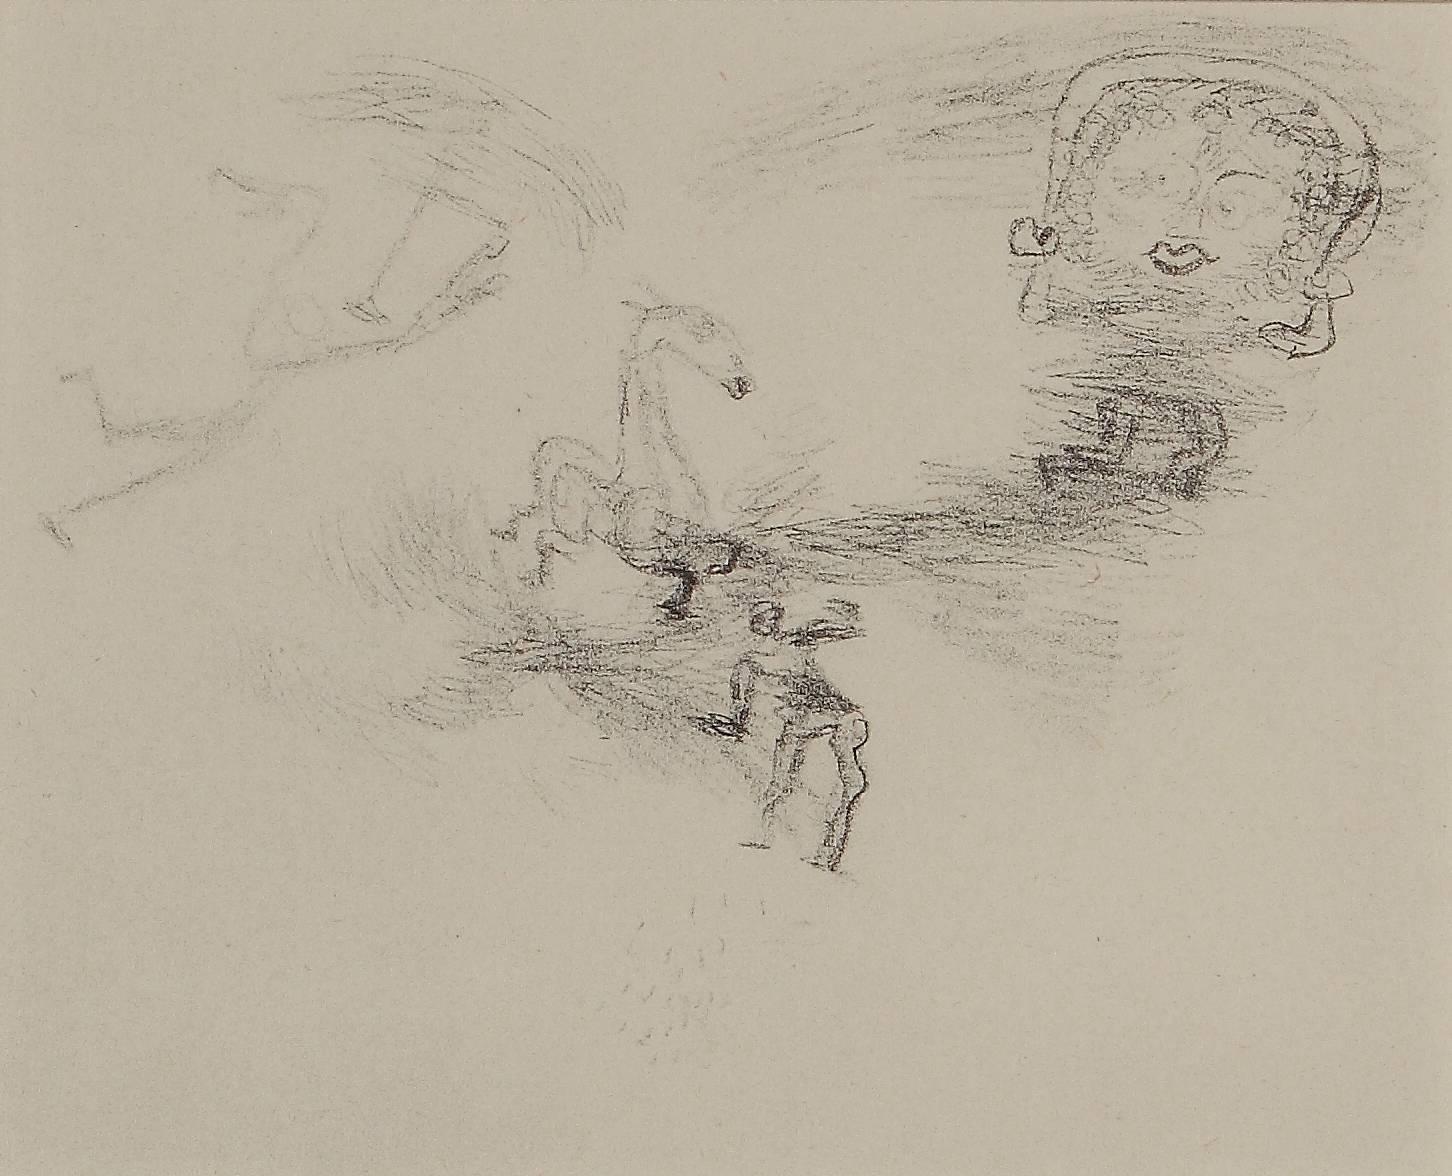 Gravure de Paul Klee « Scene aus dem Drama eines Stallmeisters » (Szene aus dem Drama eines Stallmeisters) - Print de (after) Paul Klee